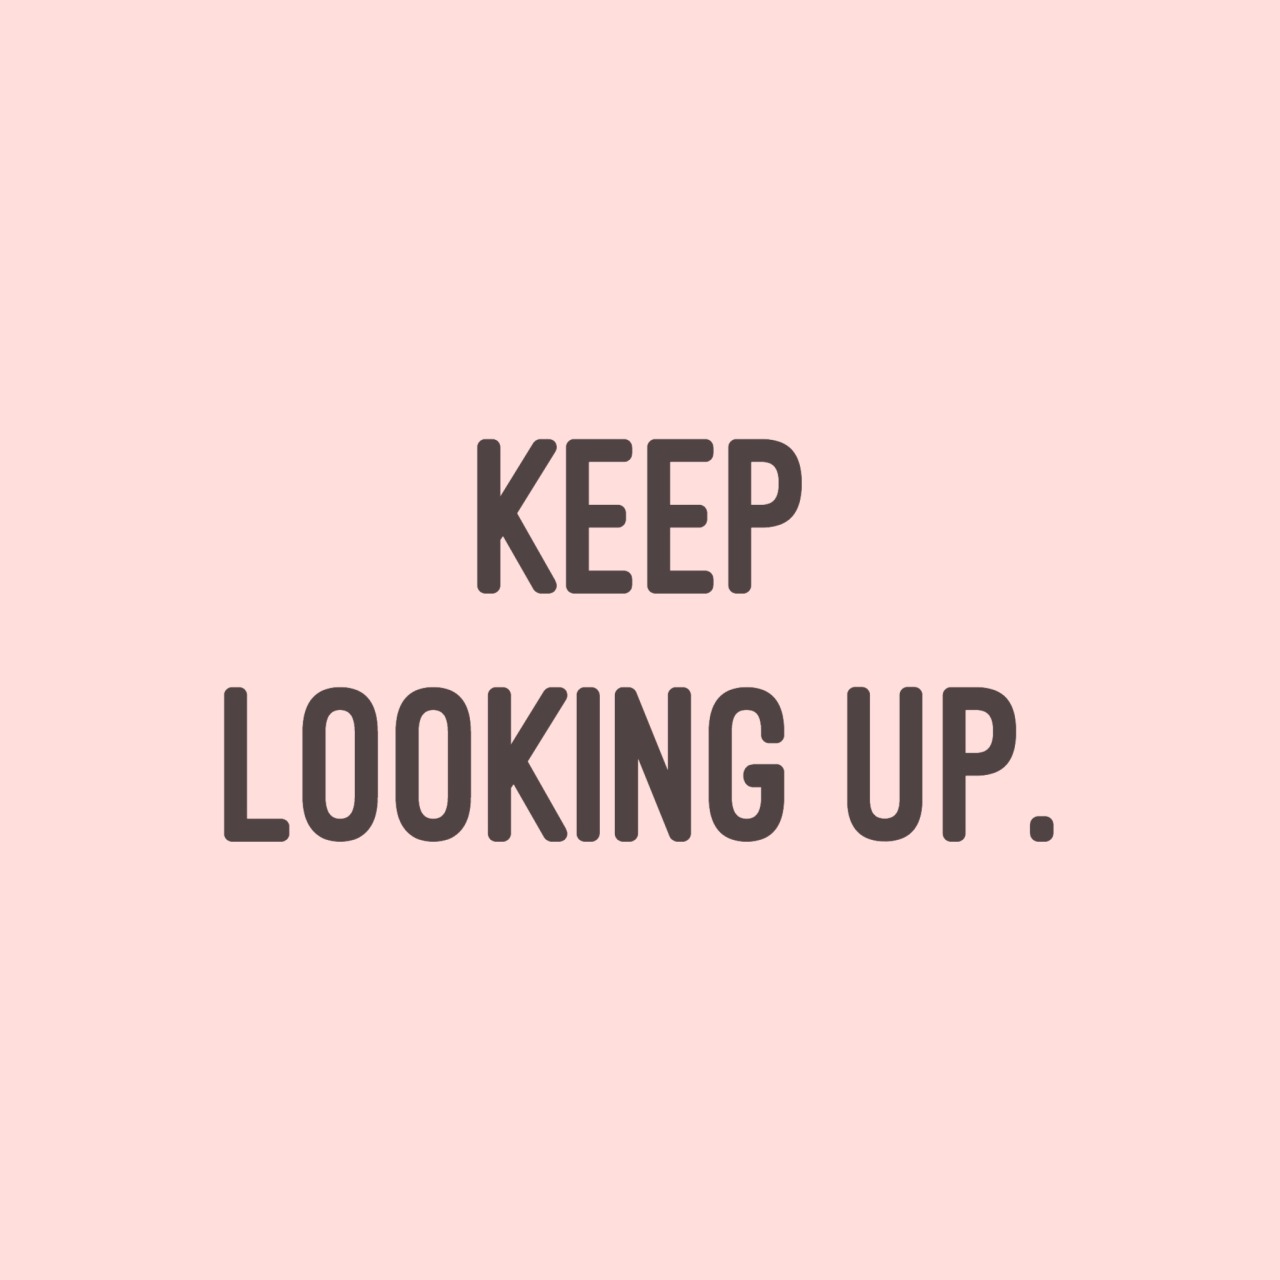 Just keep looking. Keep looking. Keep looking for. Look me up.